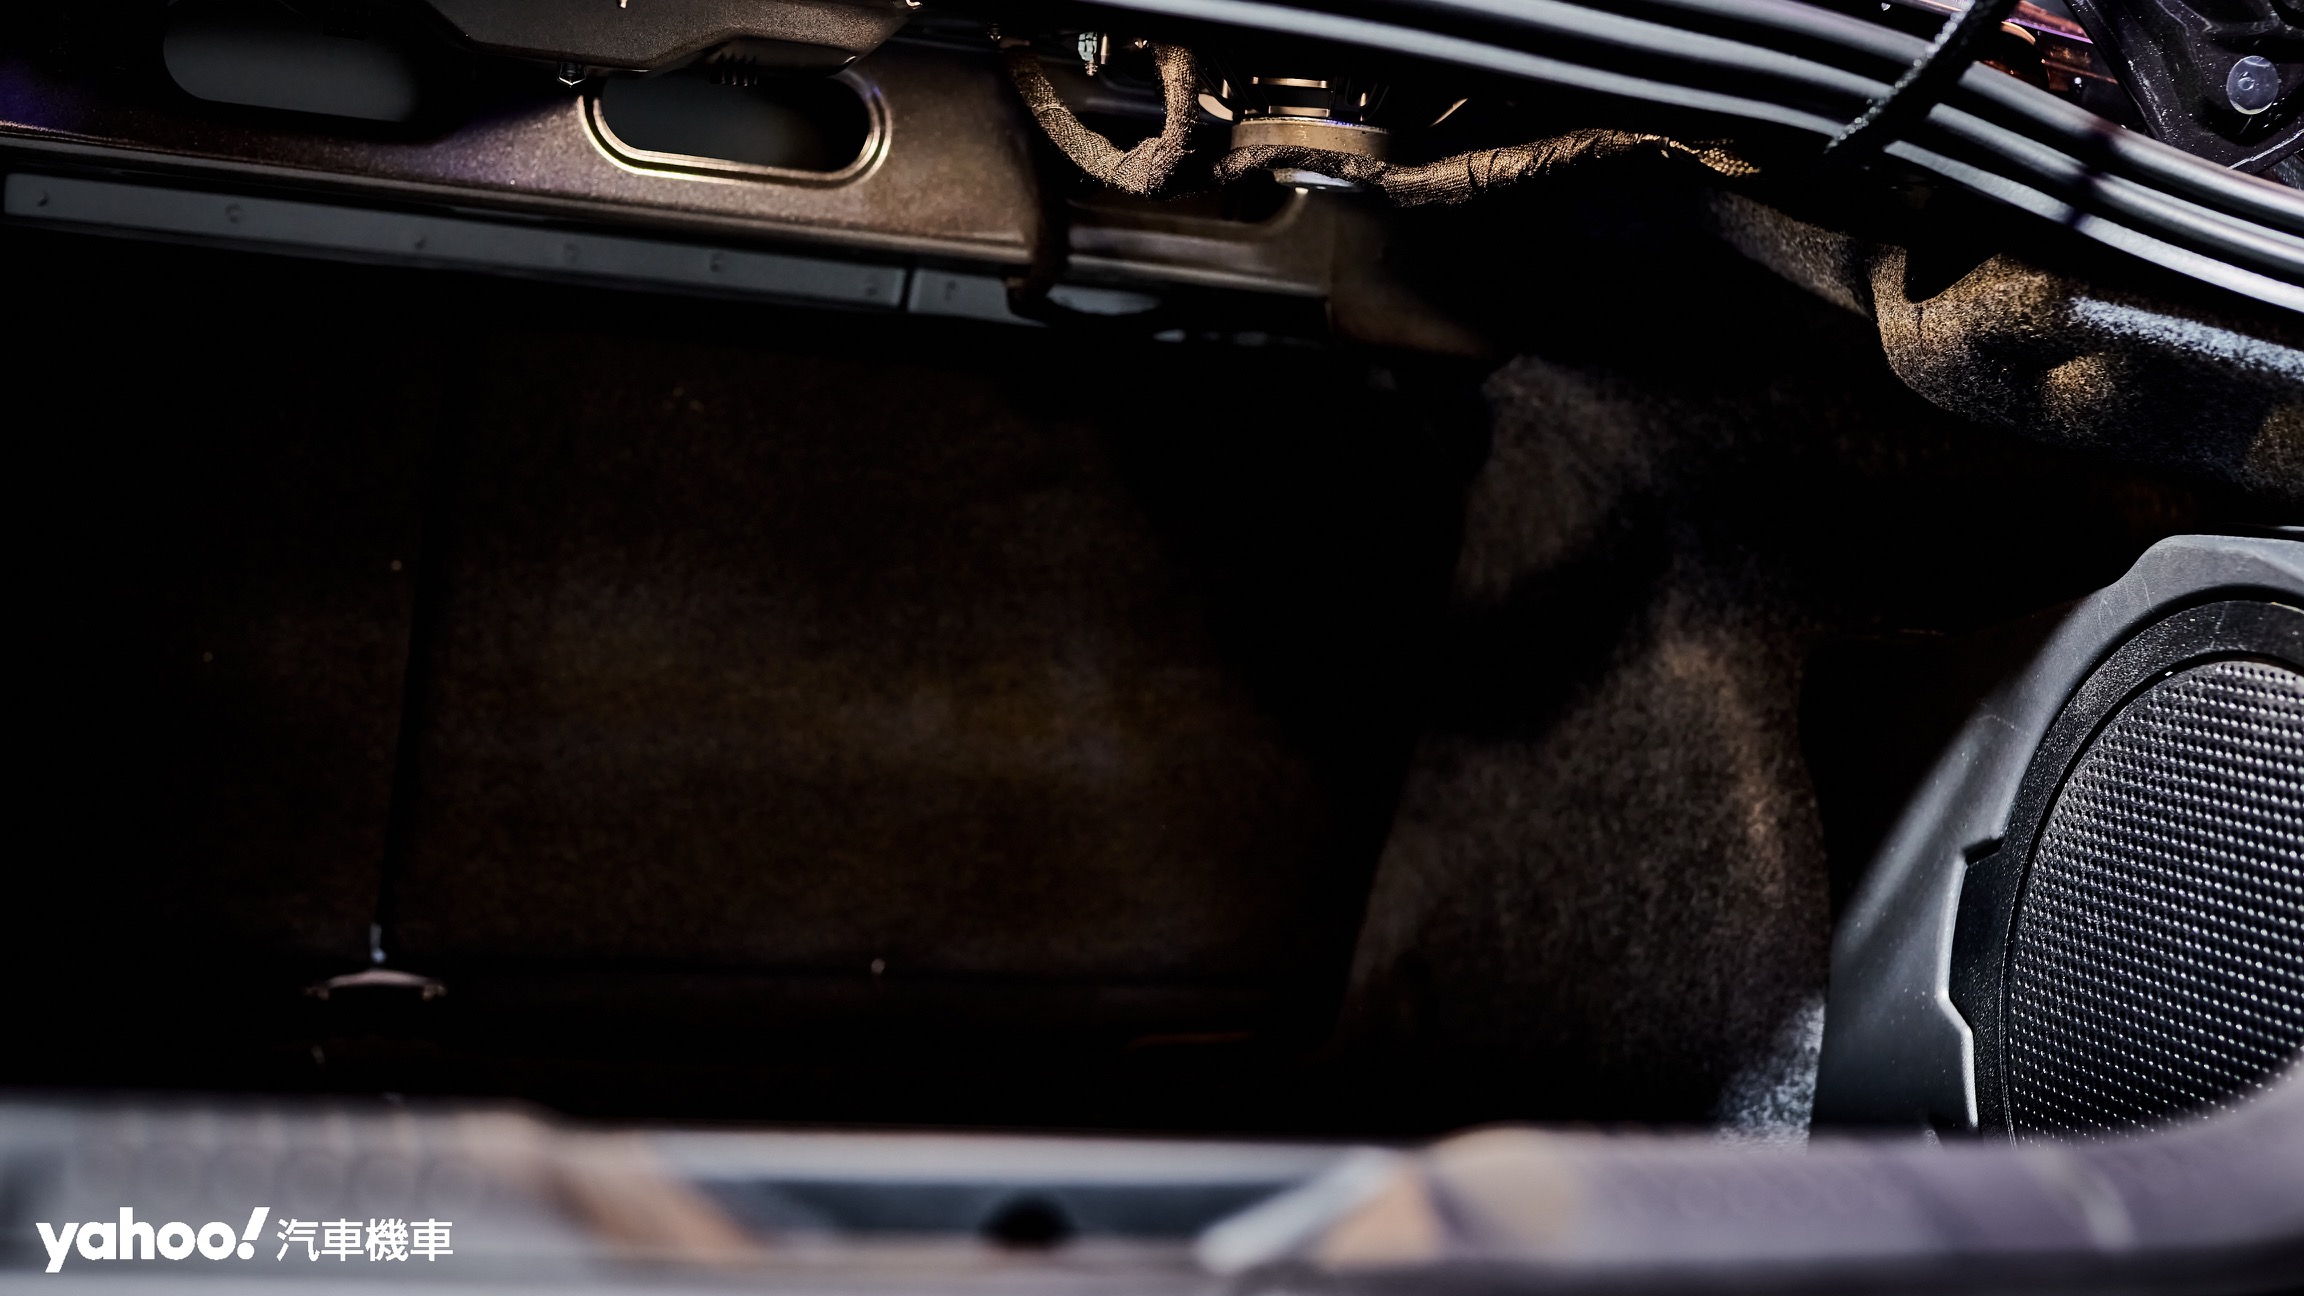 Mustang後方相當開闊的置物空間在5.0 GT車型上可見對於車內音響系統的重視。